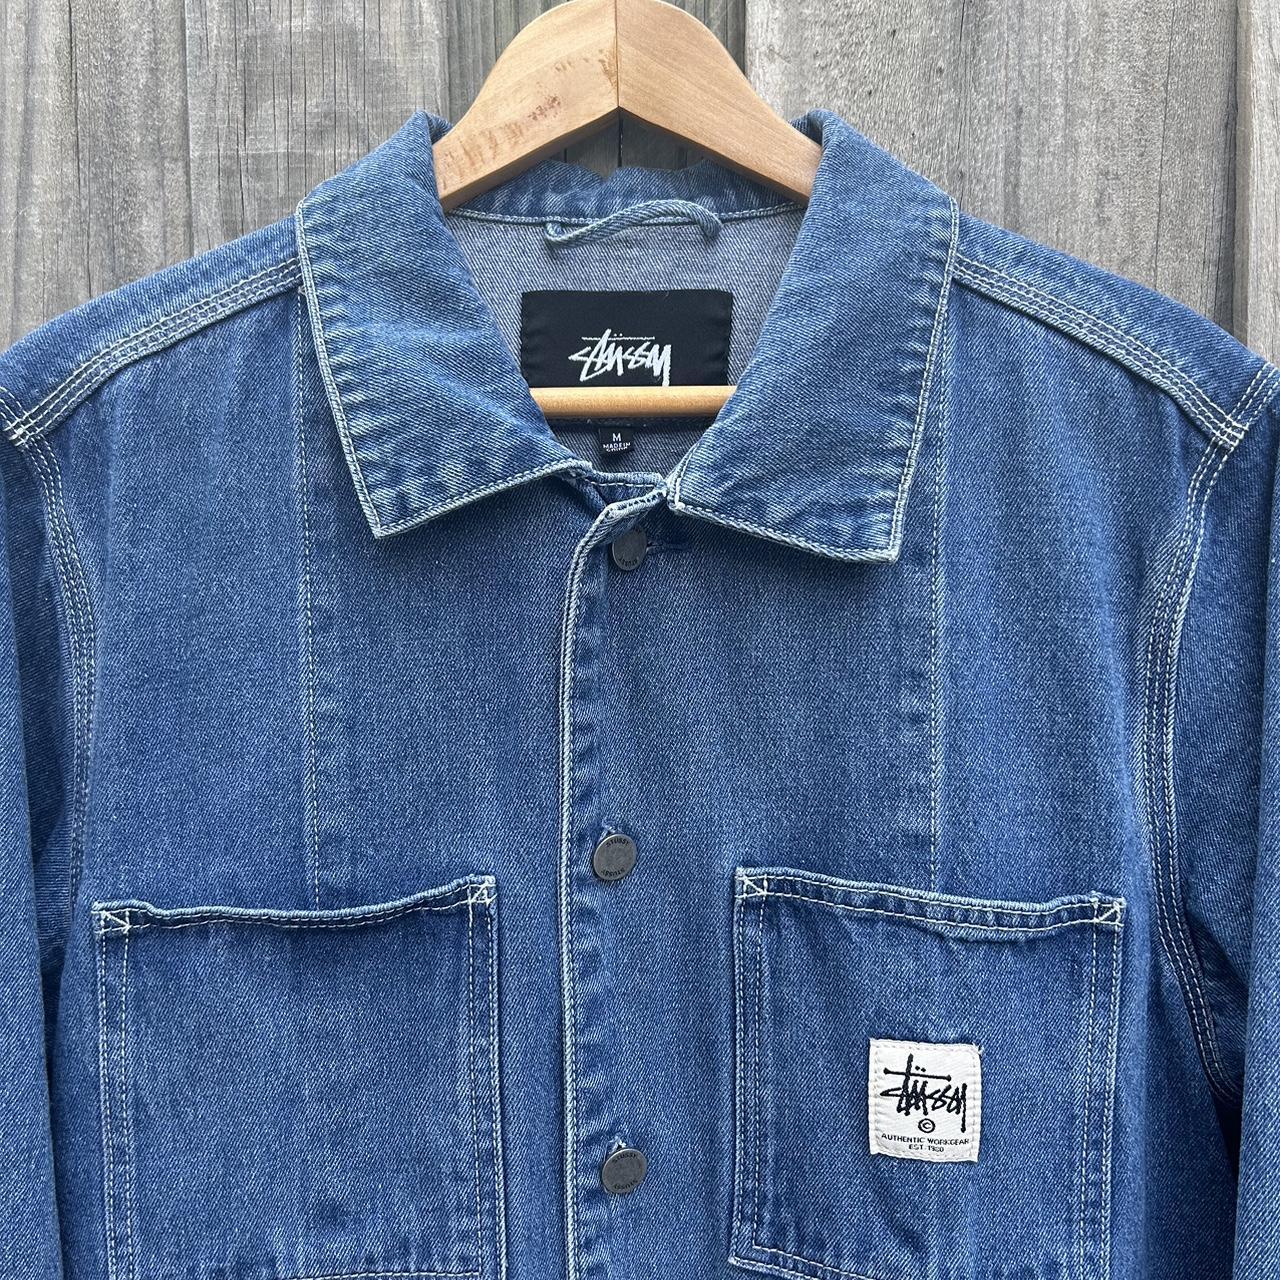 Vintage Stüssy ‘Workgear’ Denim Chore Coat / Jacket... - Depop